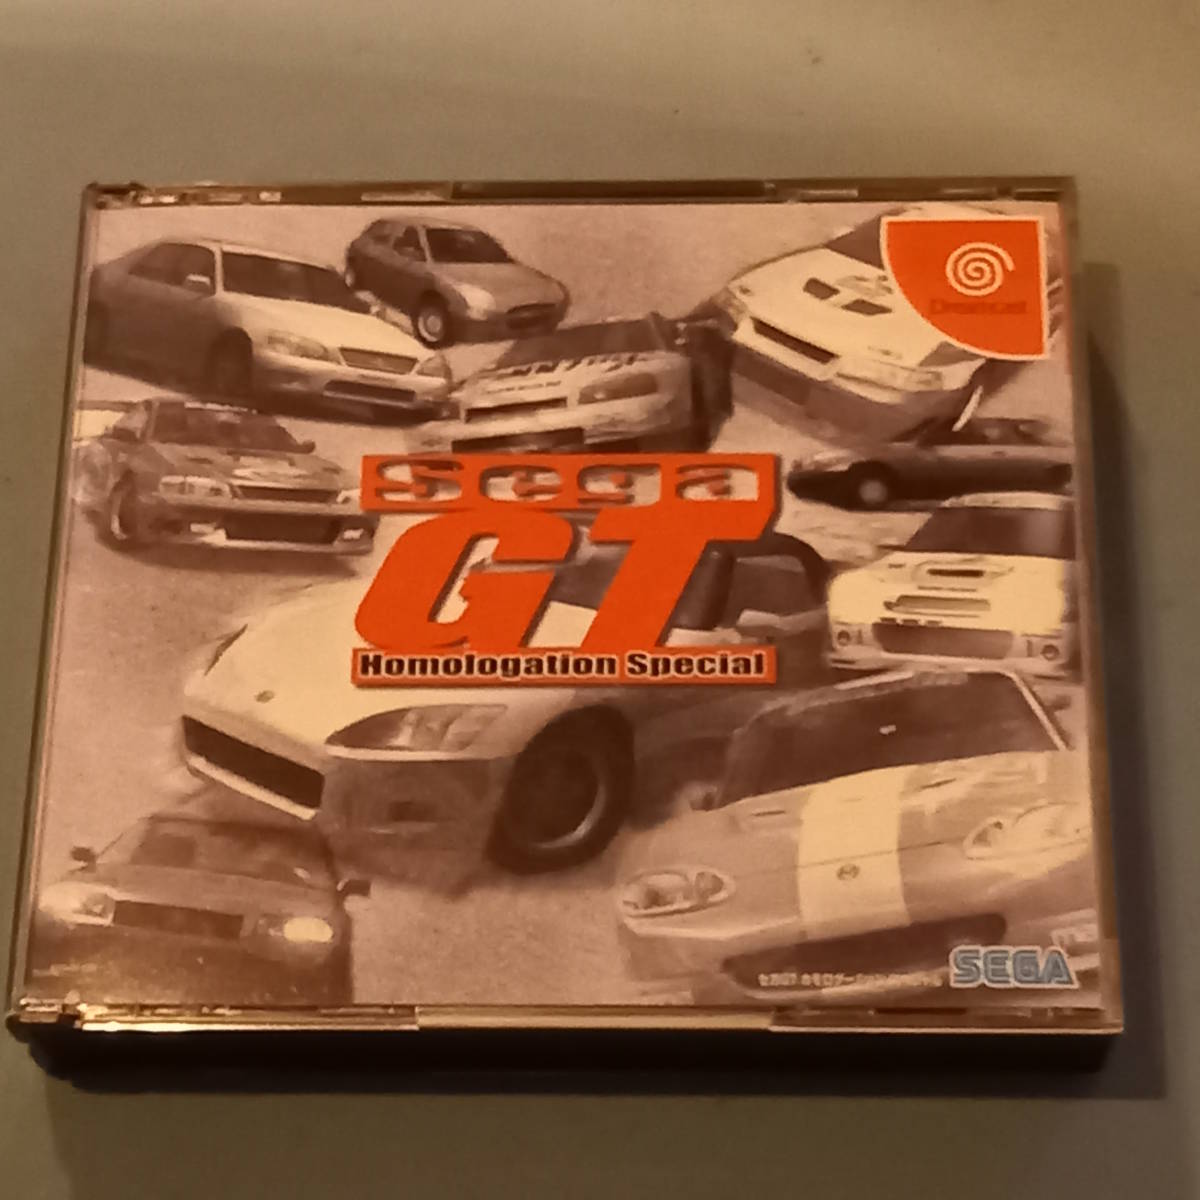  used Dreamcast Sega GT HomologationSpecial